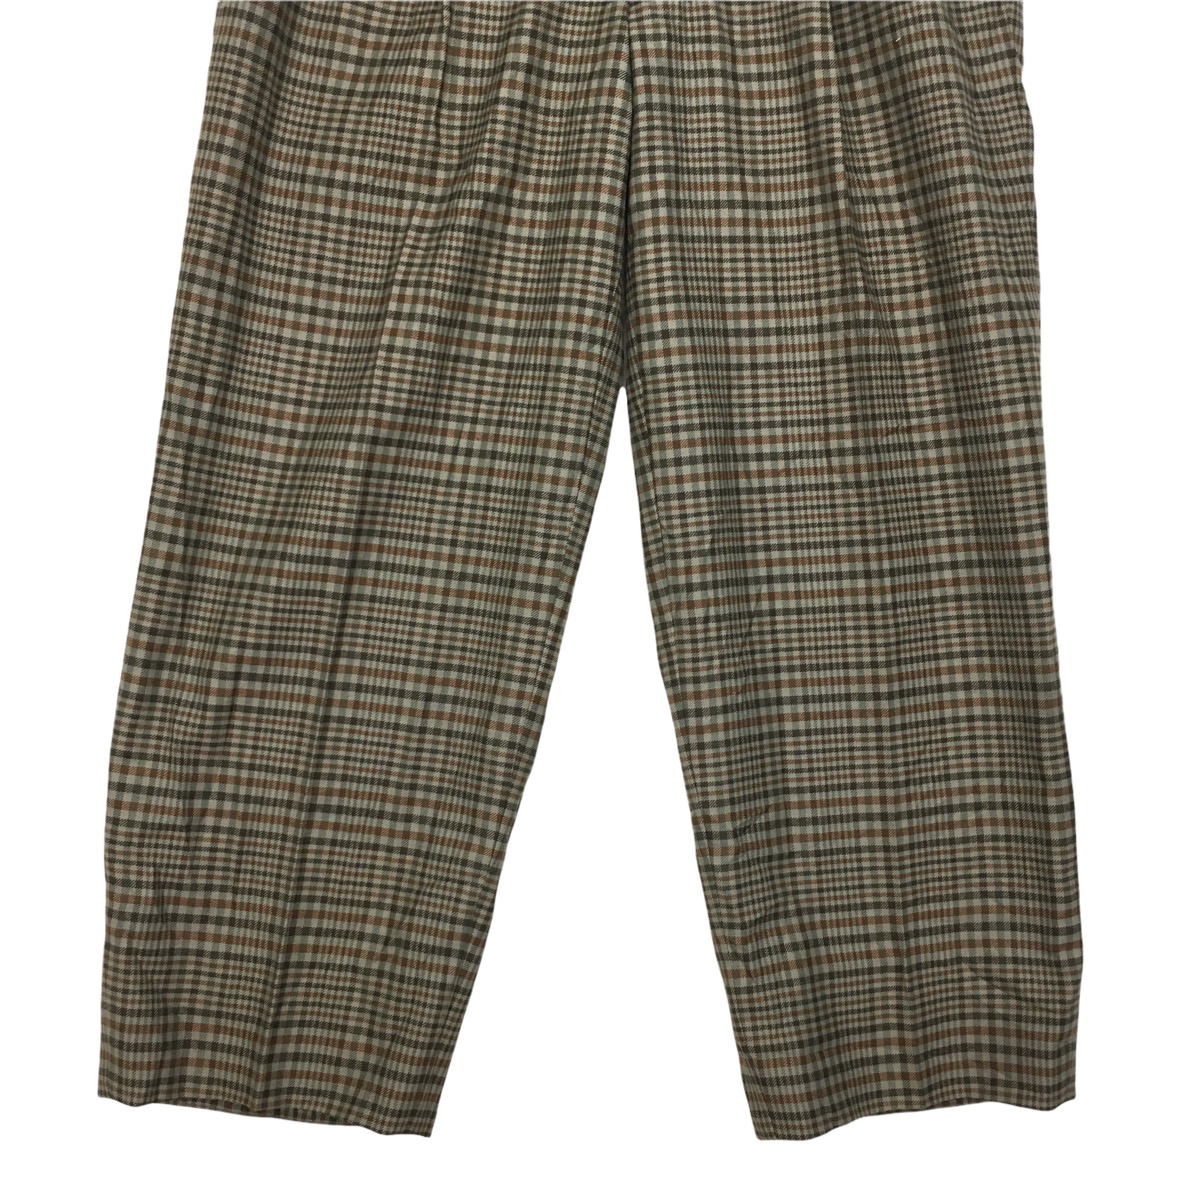 JULIUS JAPAN The Original Plaid Pants Trousers Casual Pants - 3